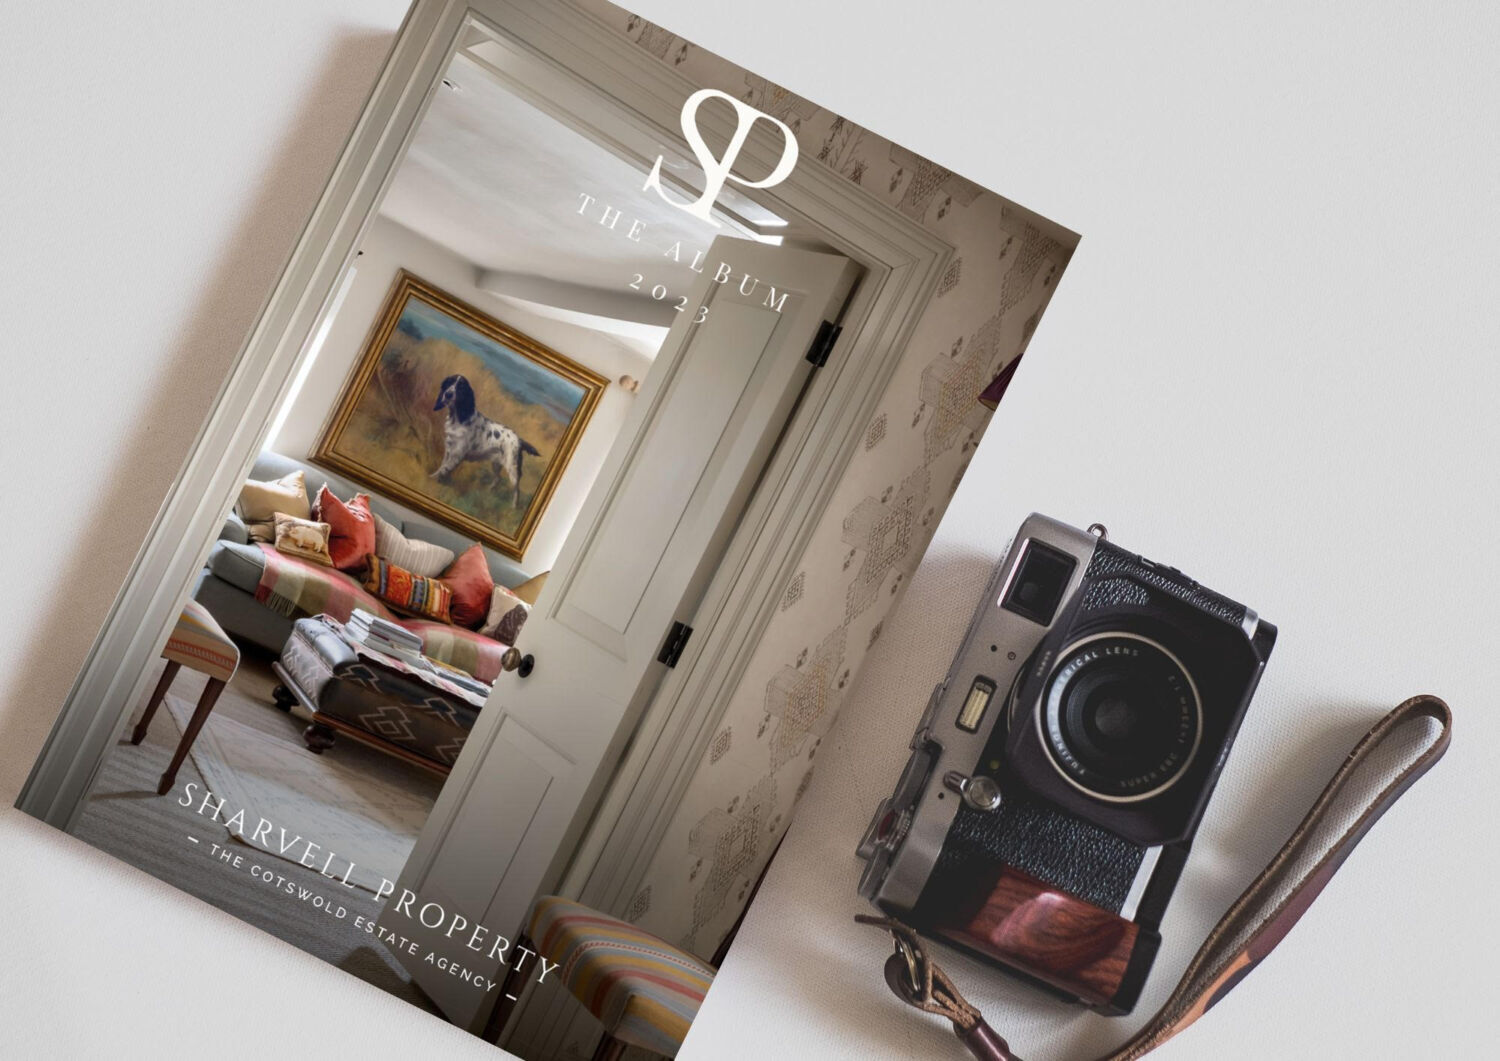 e-magazine showcasing some of Sharvell Property’s latest home